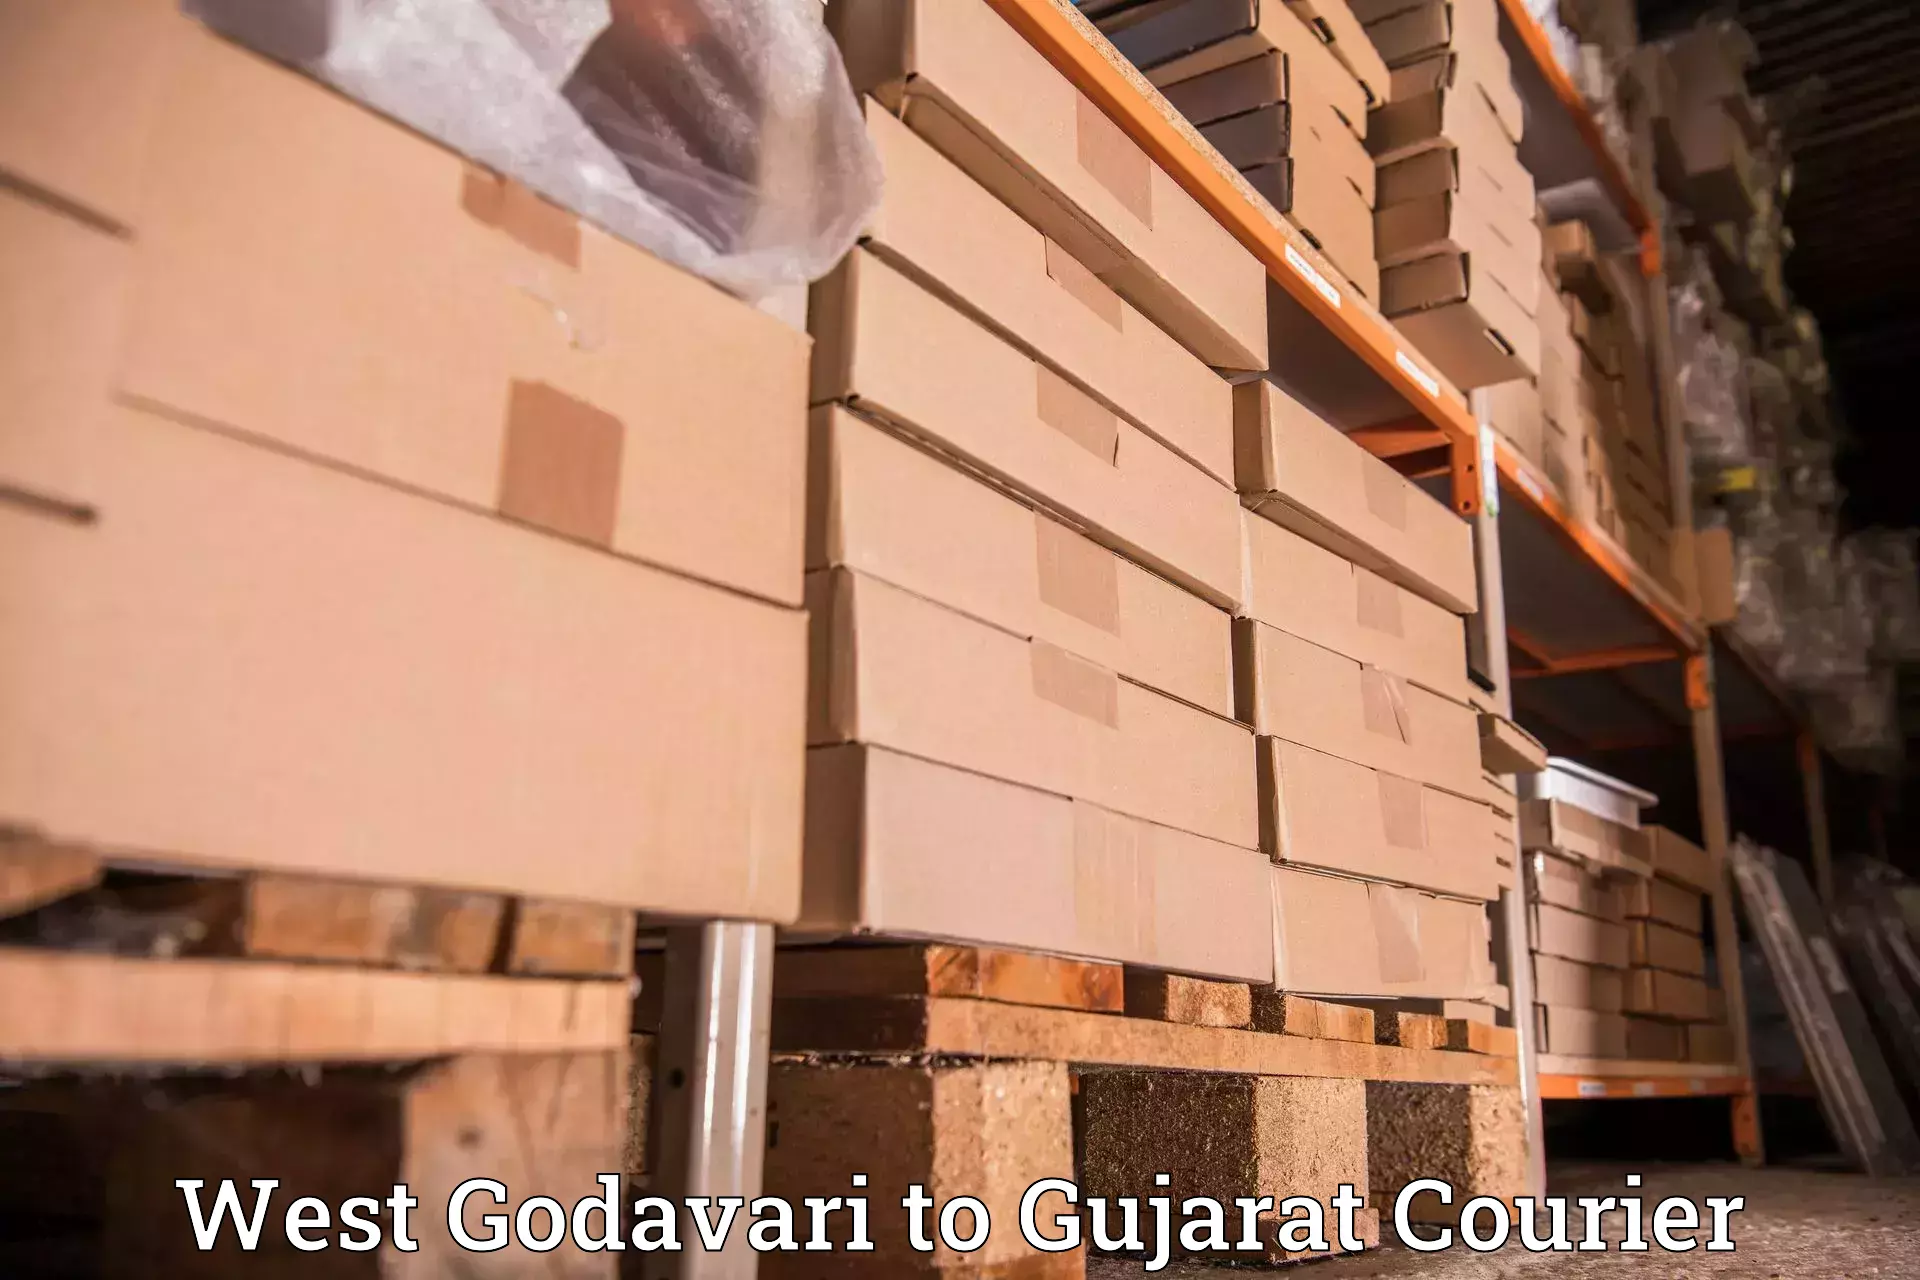 Cash on delivery service West Godavari to Gujarat